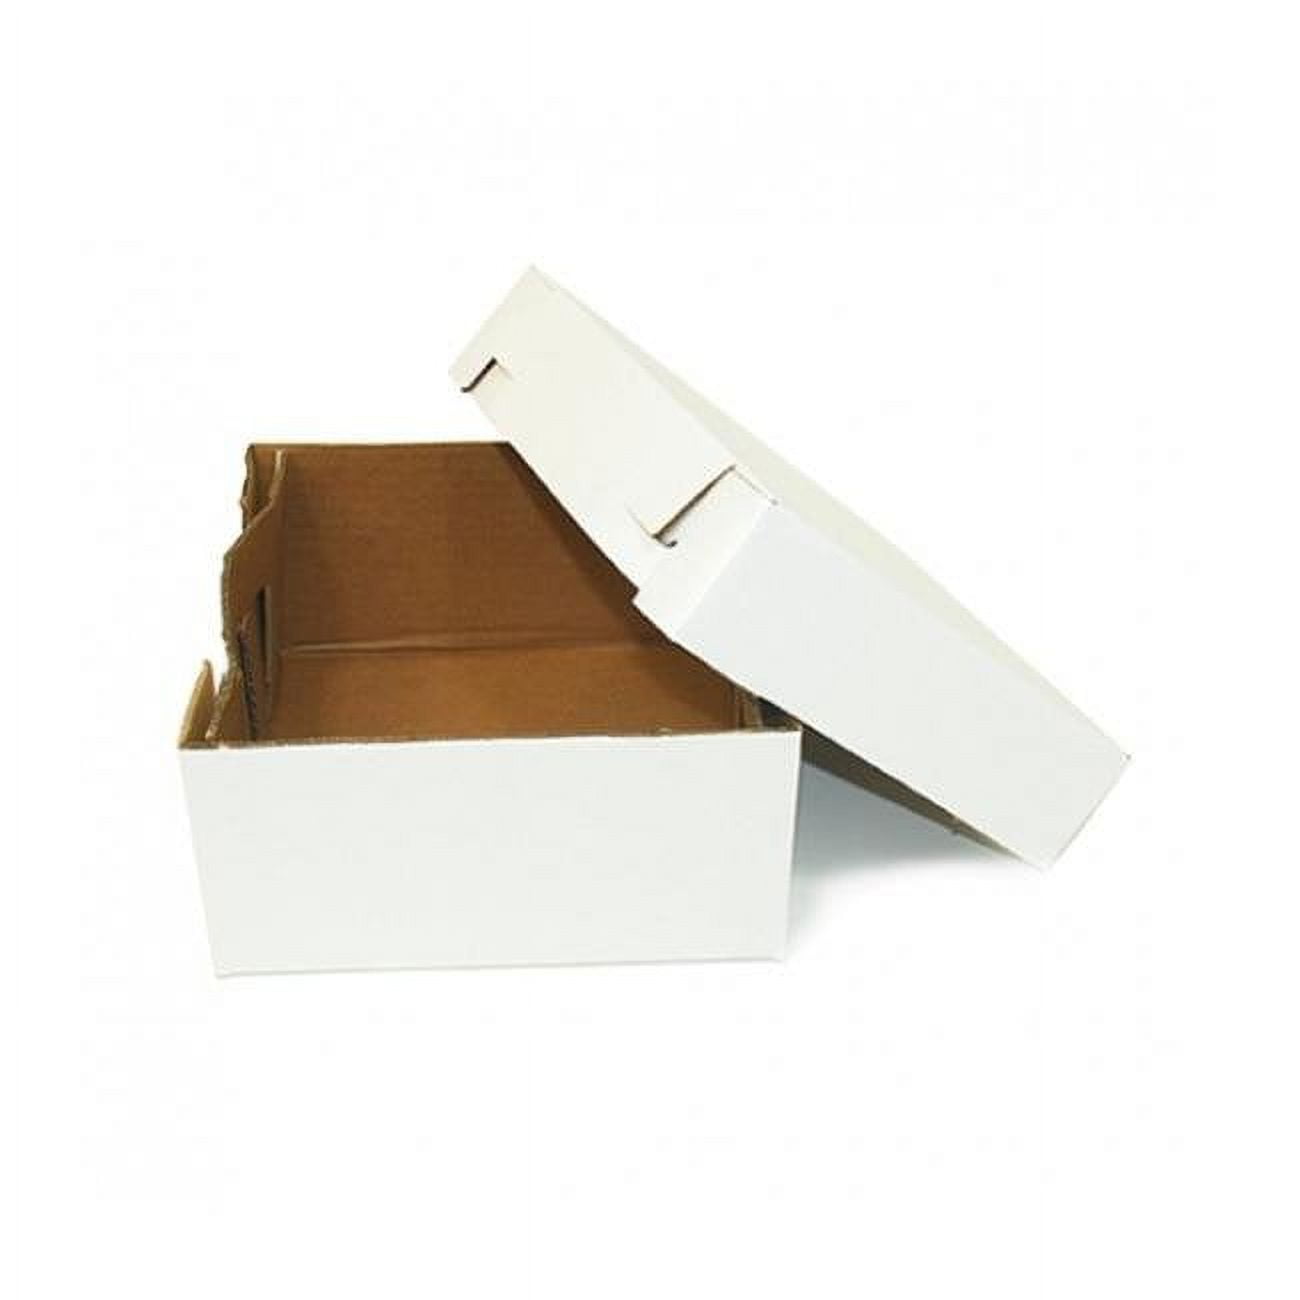 Picture of CPC 14146 CPC 14 x 14 x 6 in. Two Piece Corrugated Cake Box  White - Case of 25